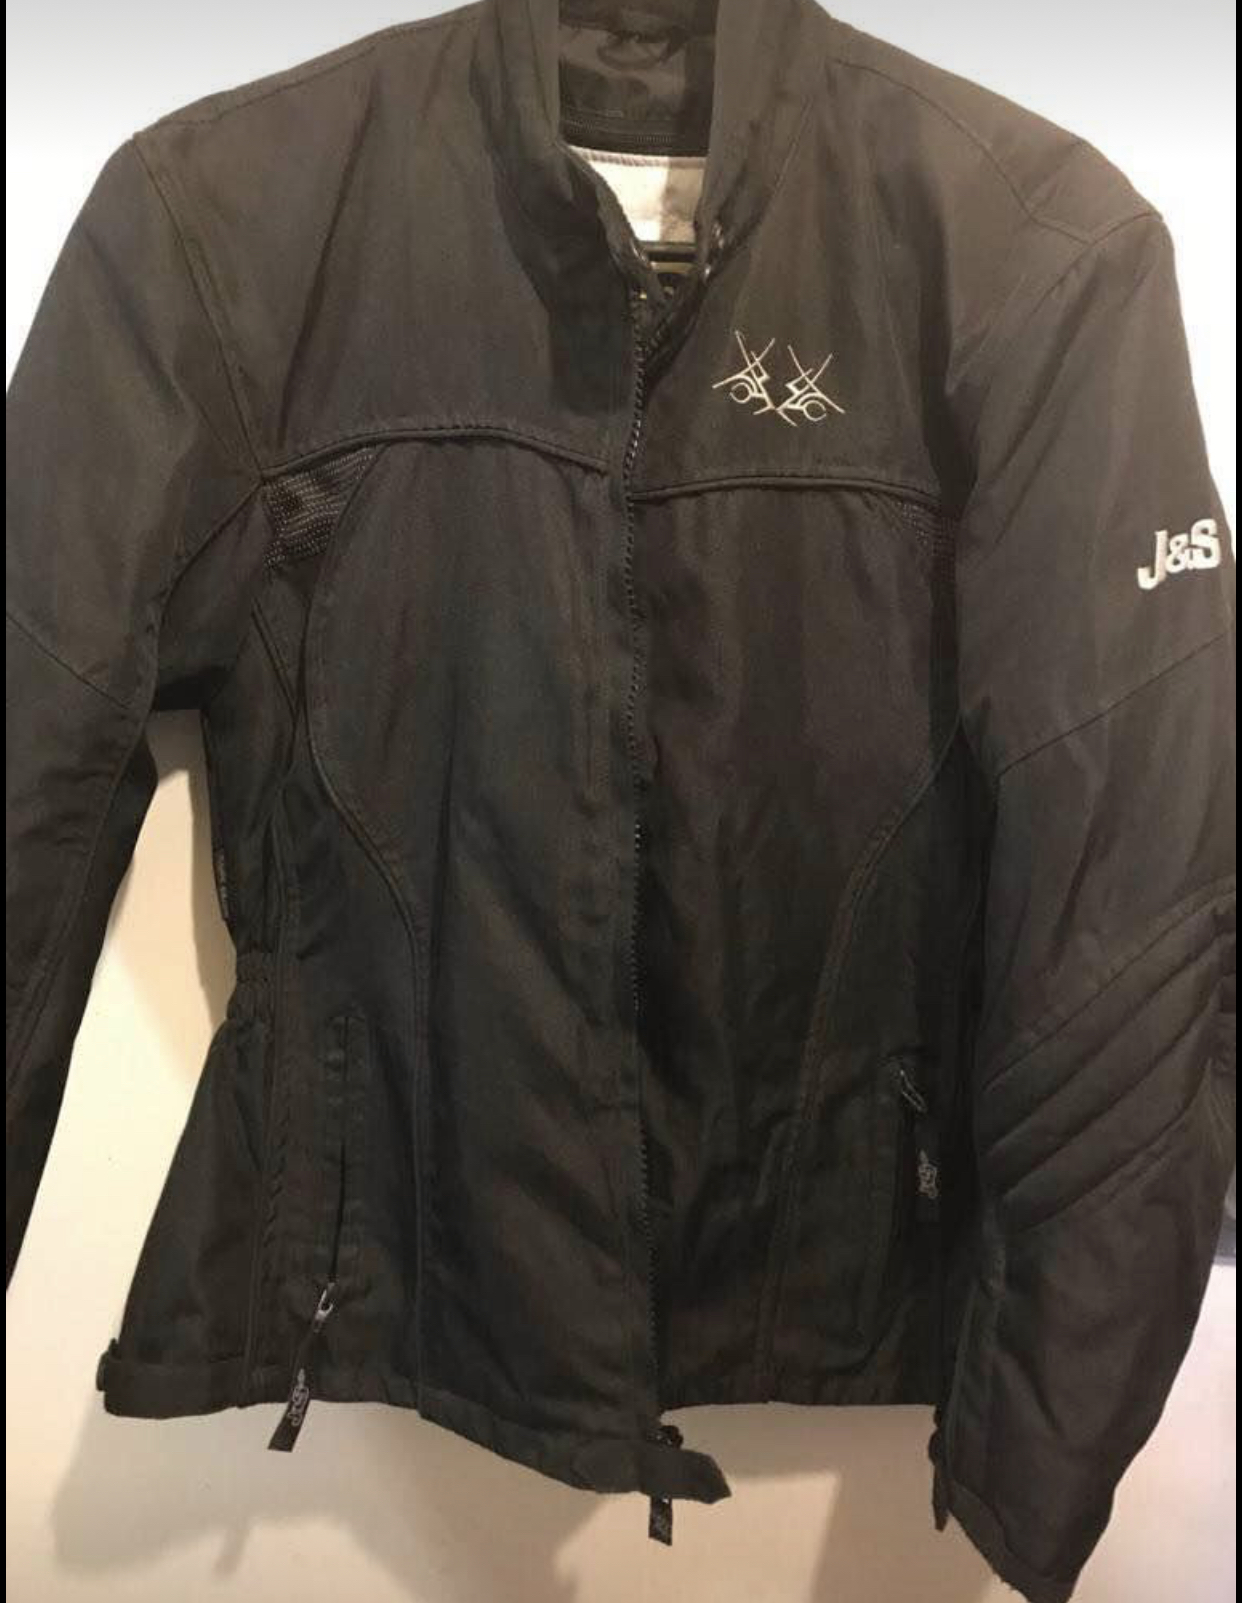 J&S motorbike jacket